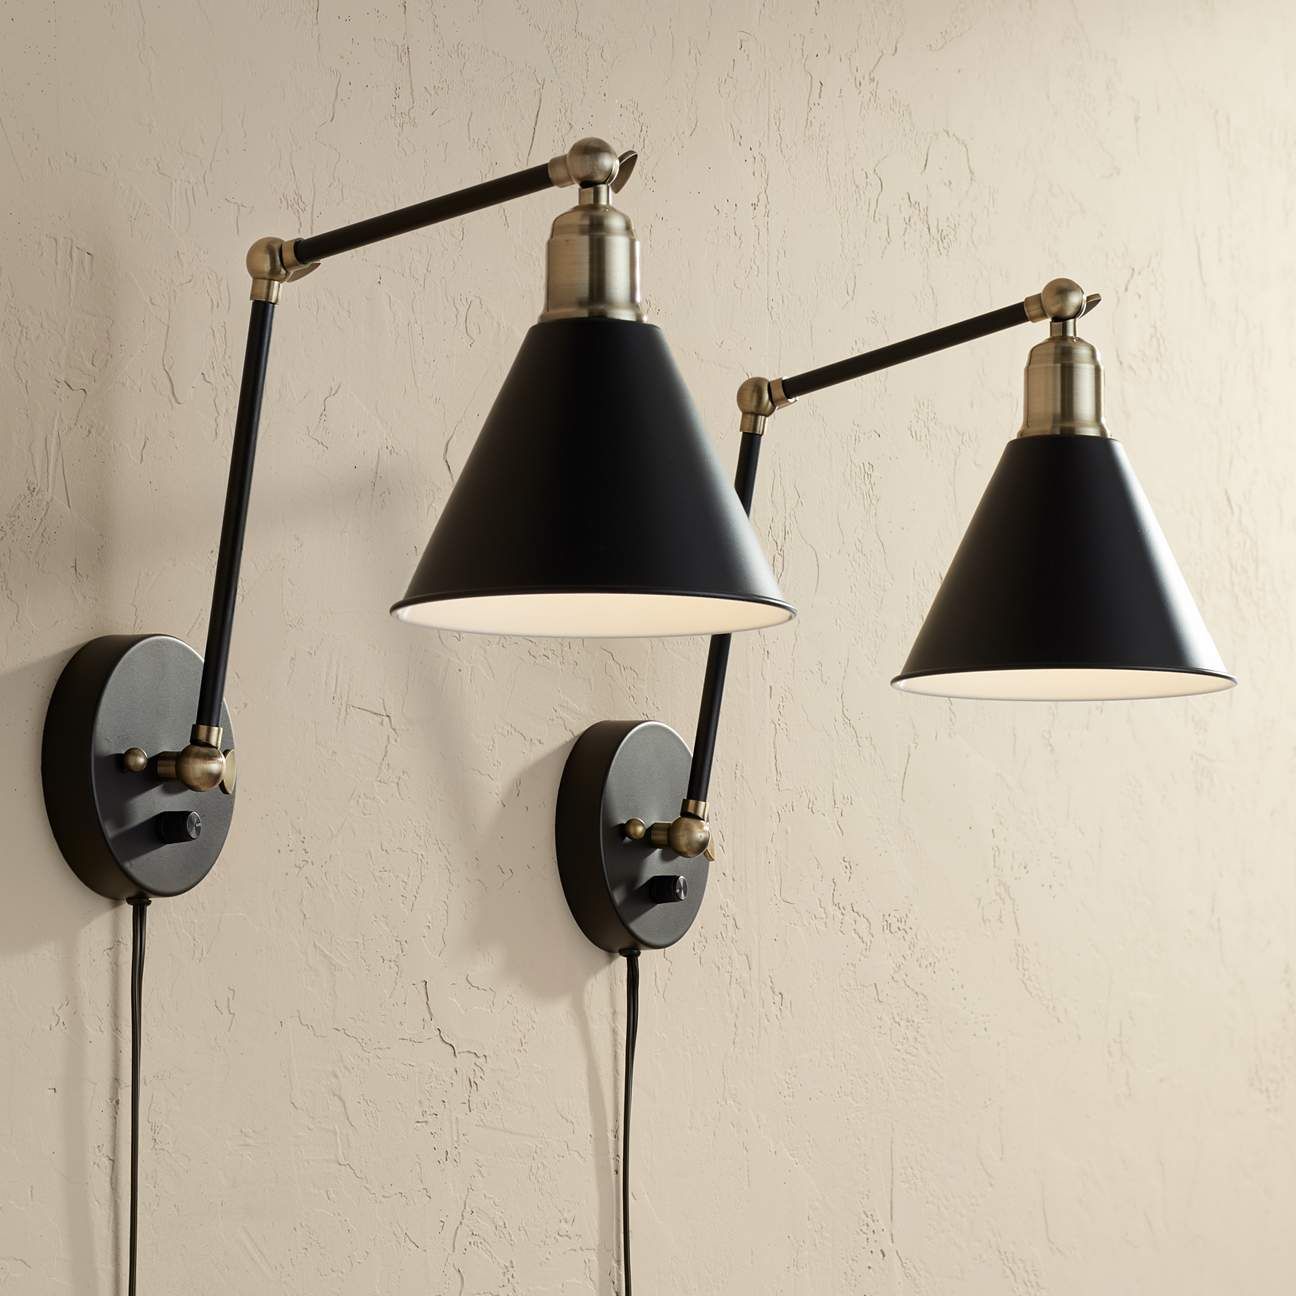 Wray Black and Antique Brass Plug-In Wall Lamp Set of 2 | www.lampsplus.com | LampsPlus.com